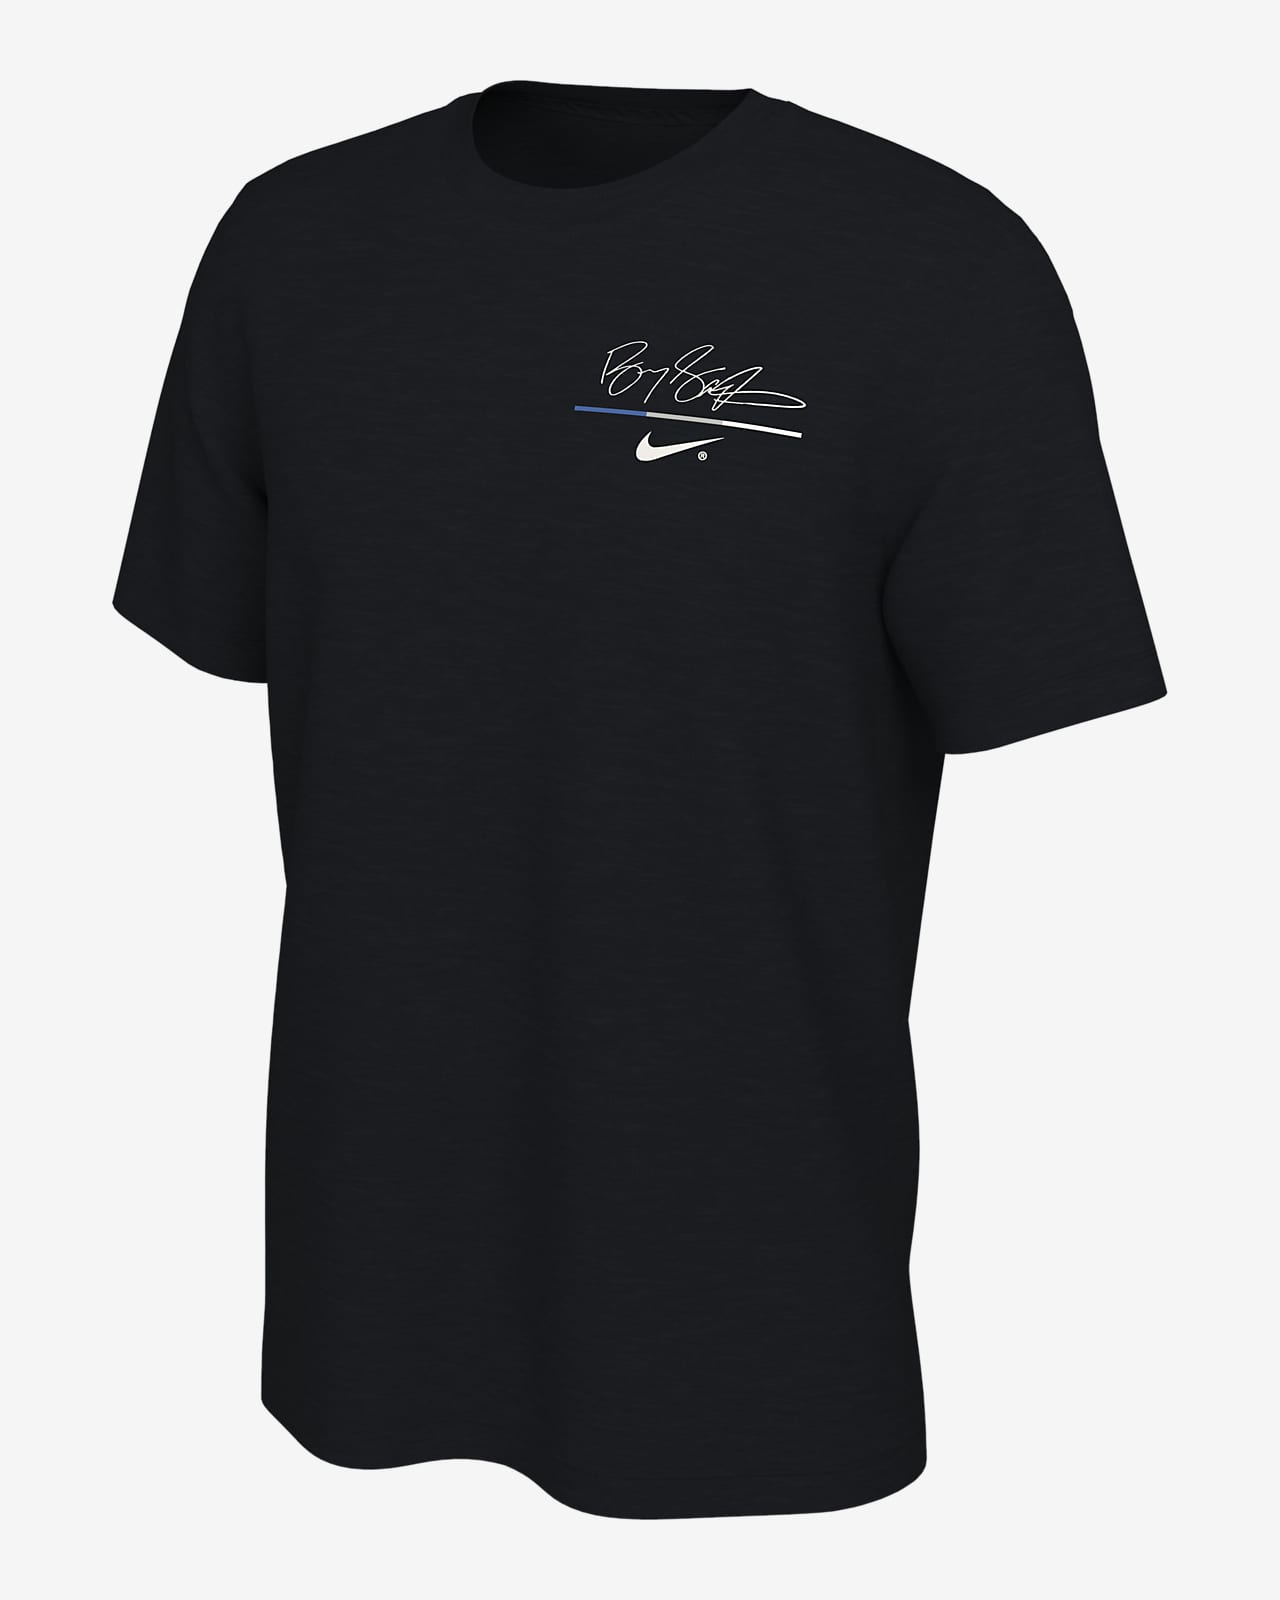 Barry Sanders Men's Nike T-Shirt.